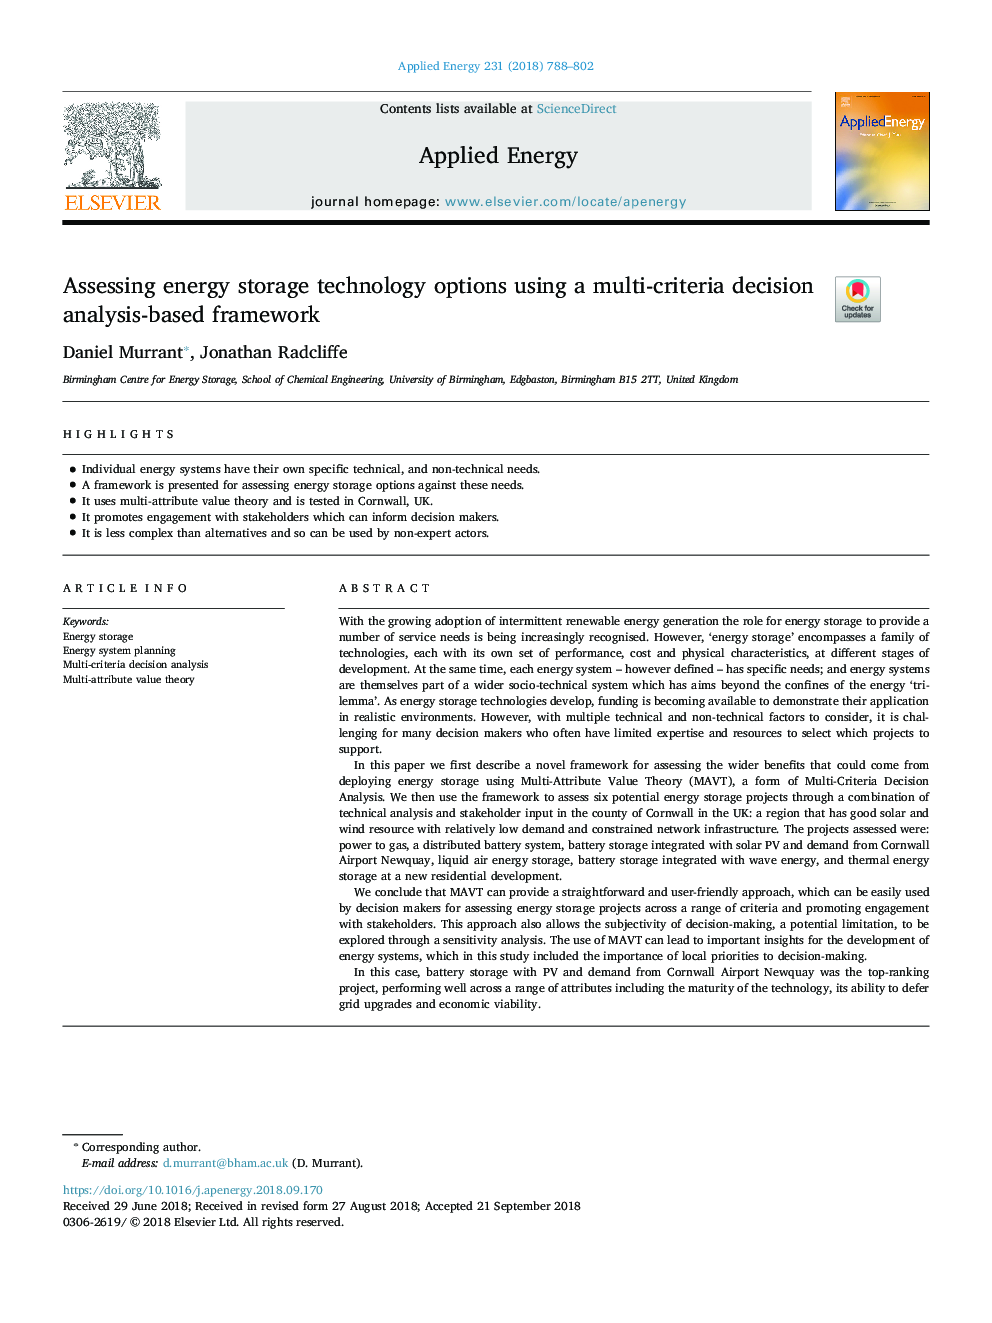 Assessing energy storage technology options using a multi-criteria decision analysis-based framework